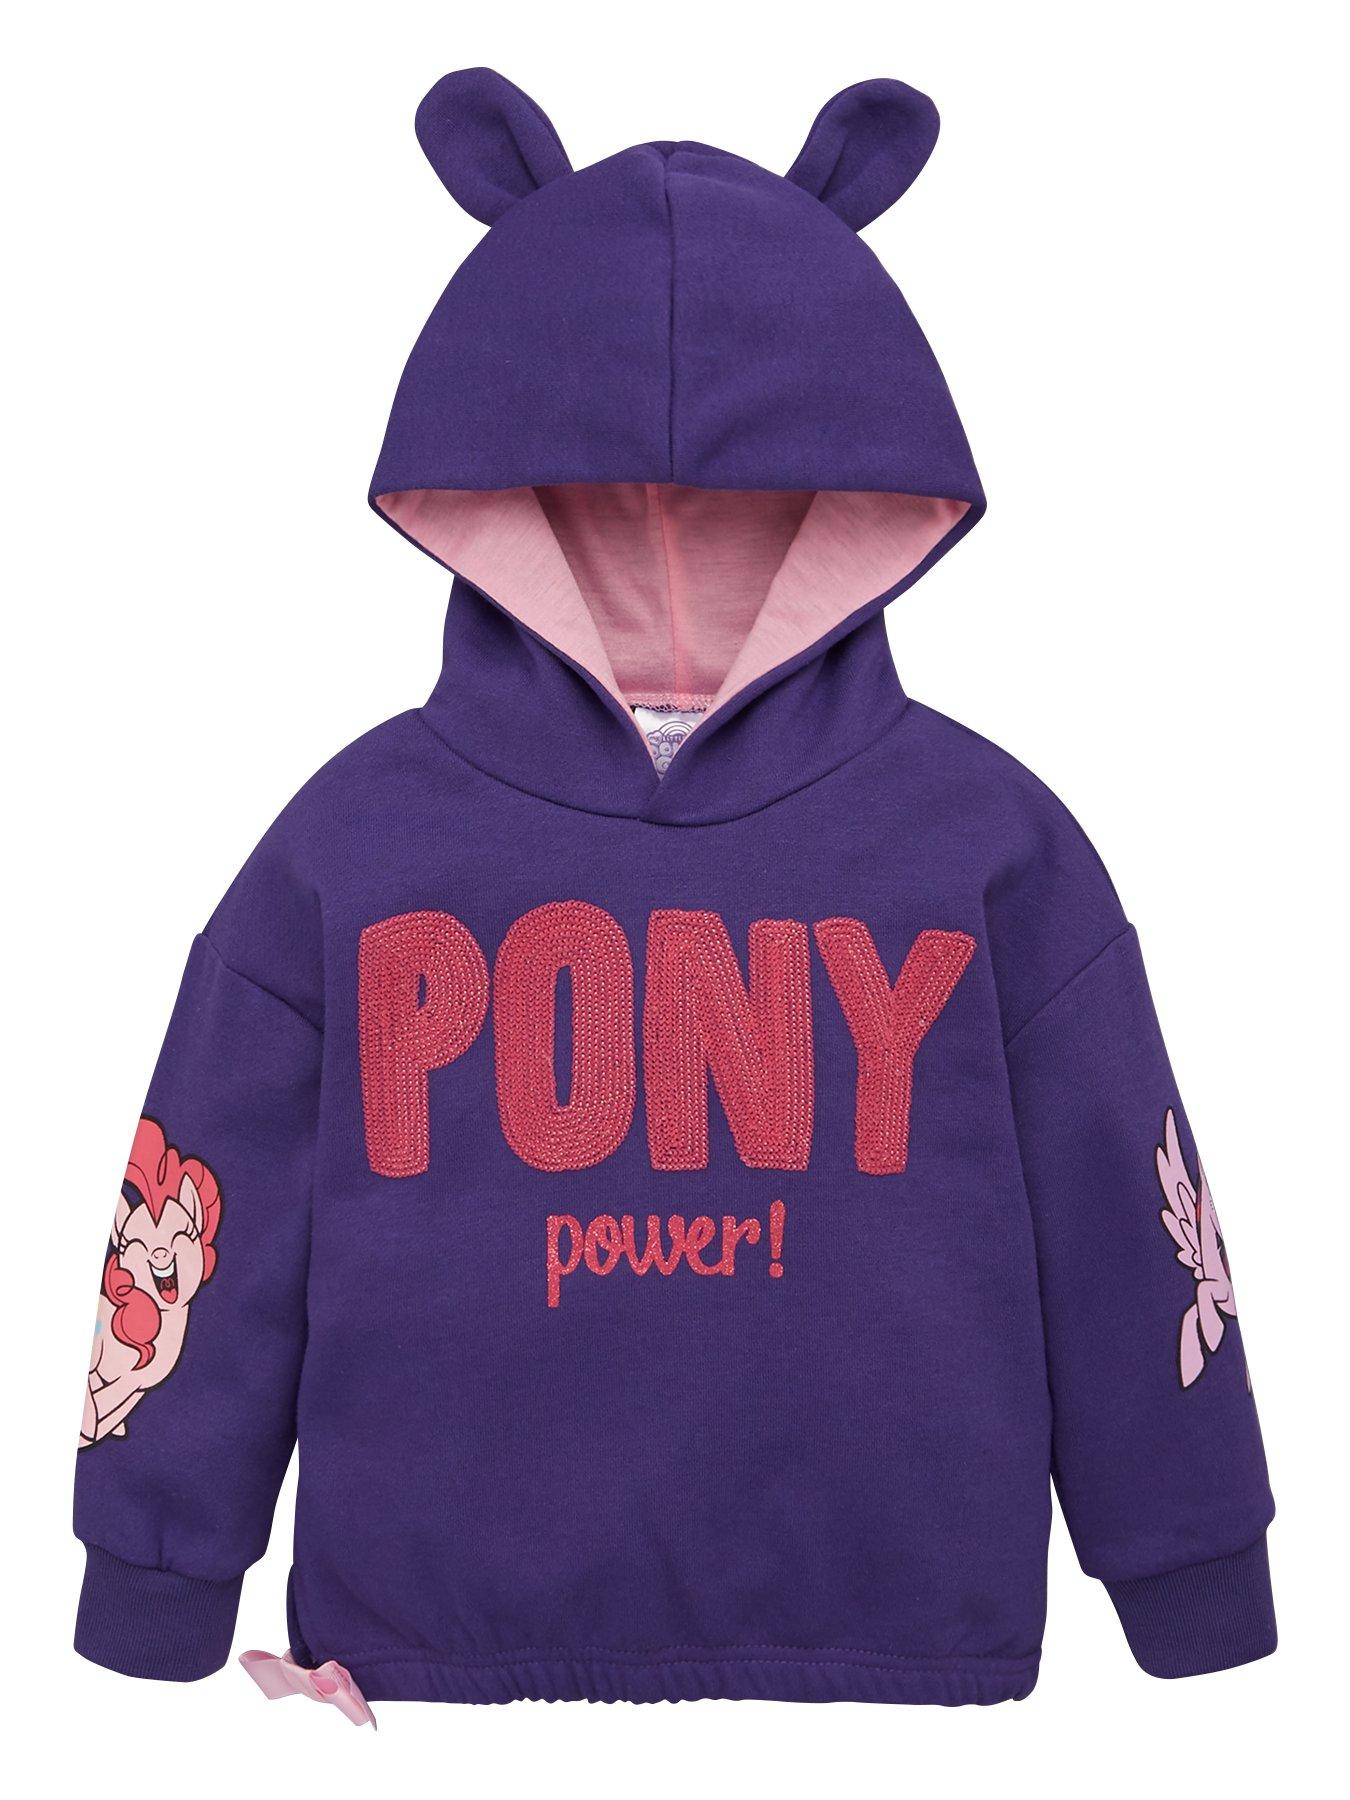 My Little Pony Pony Power Hoodie Purple Littlewoodsireland Ie - lost silver mlp roblox